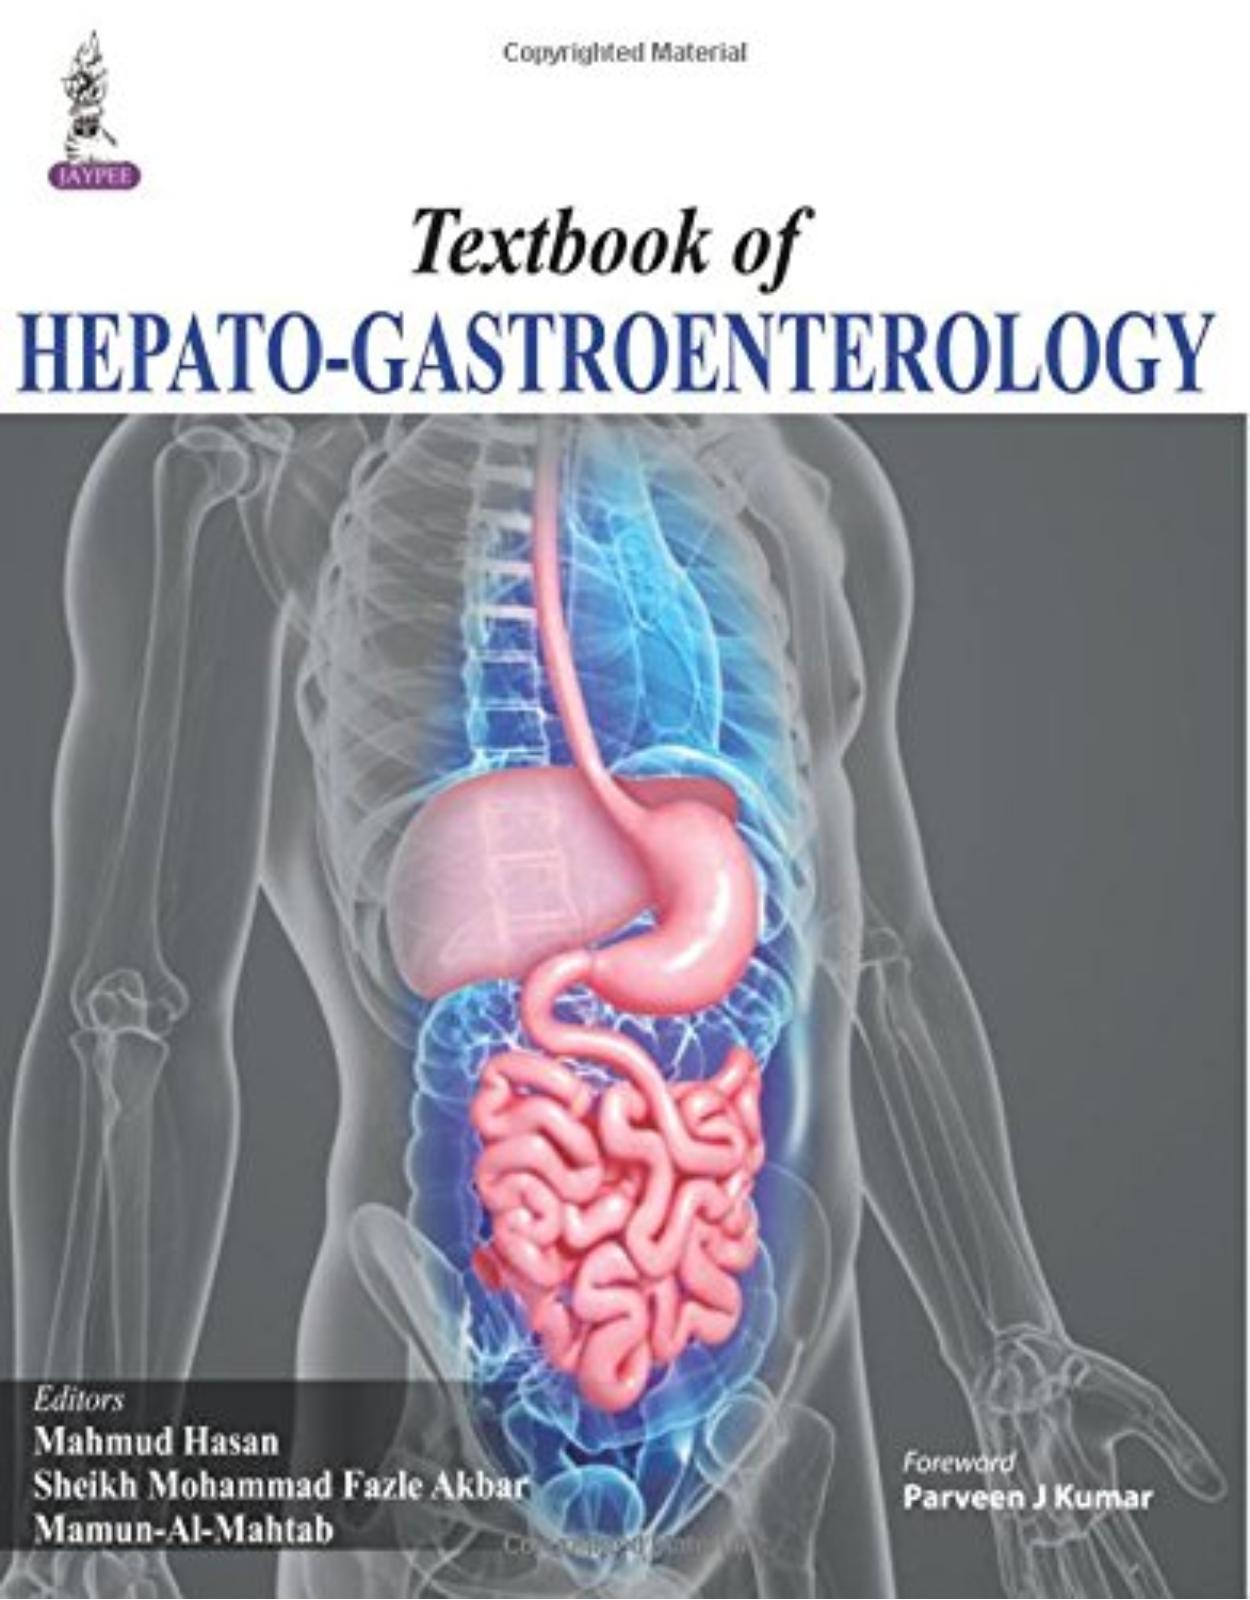 Textbook of Hepato-Gastroenterology